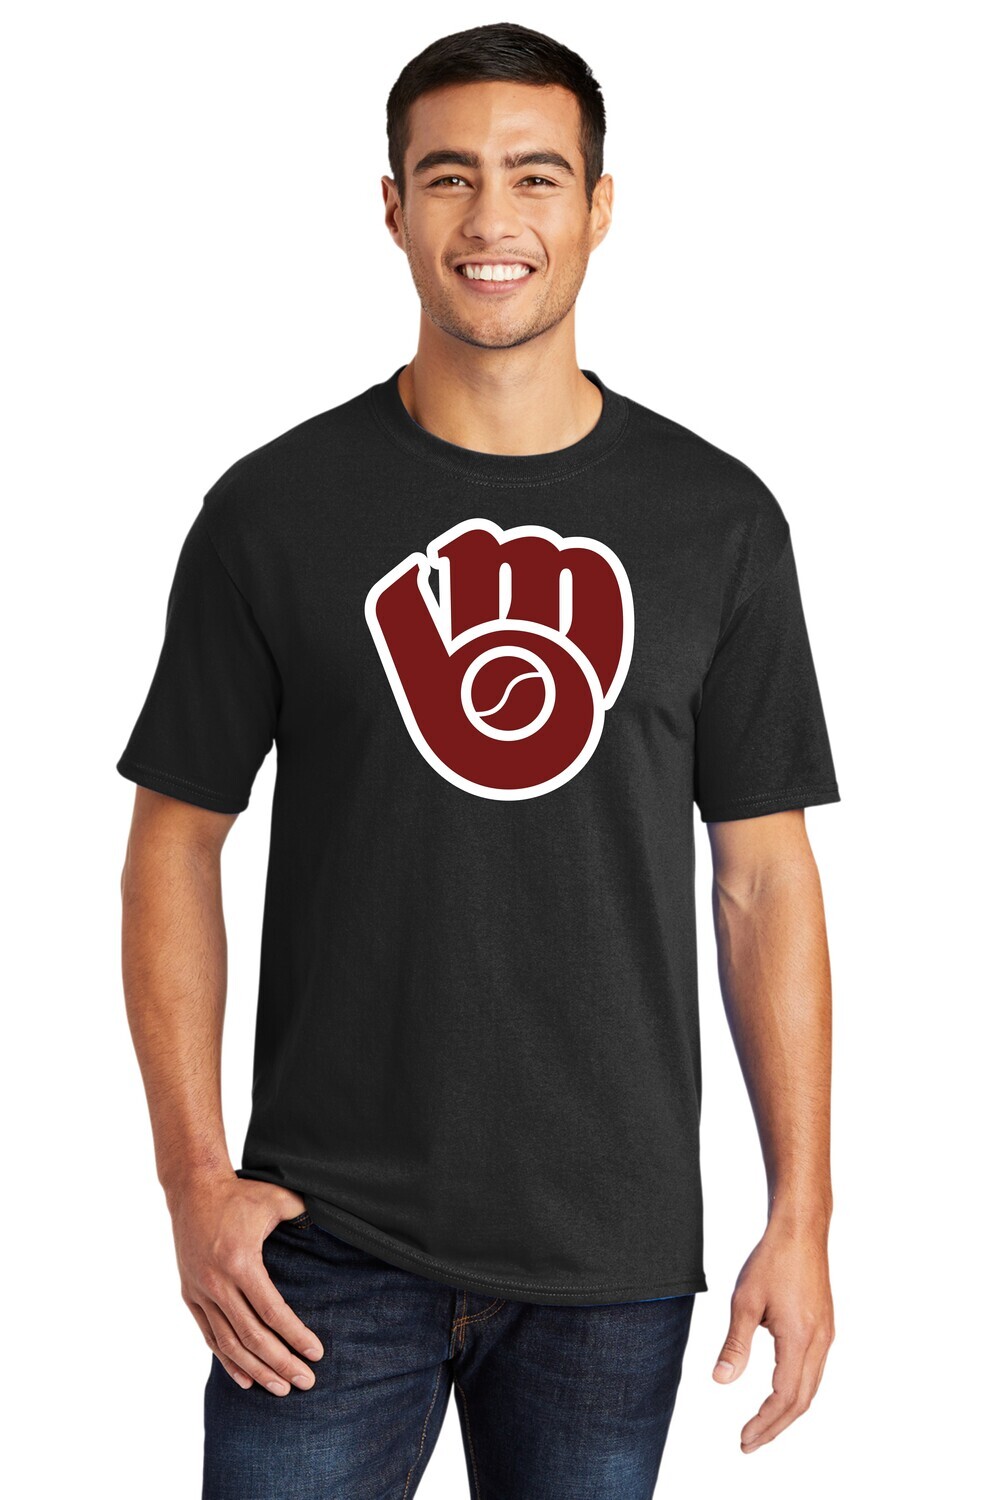 Moline Blackhawks Glove Logo 50/50 Blend Adult T-shirt